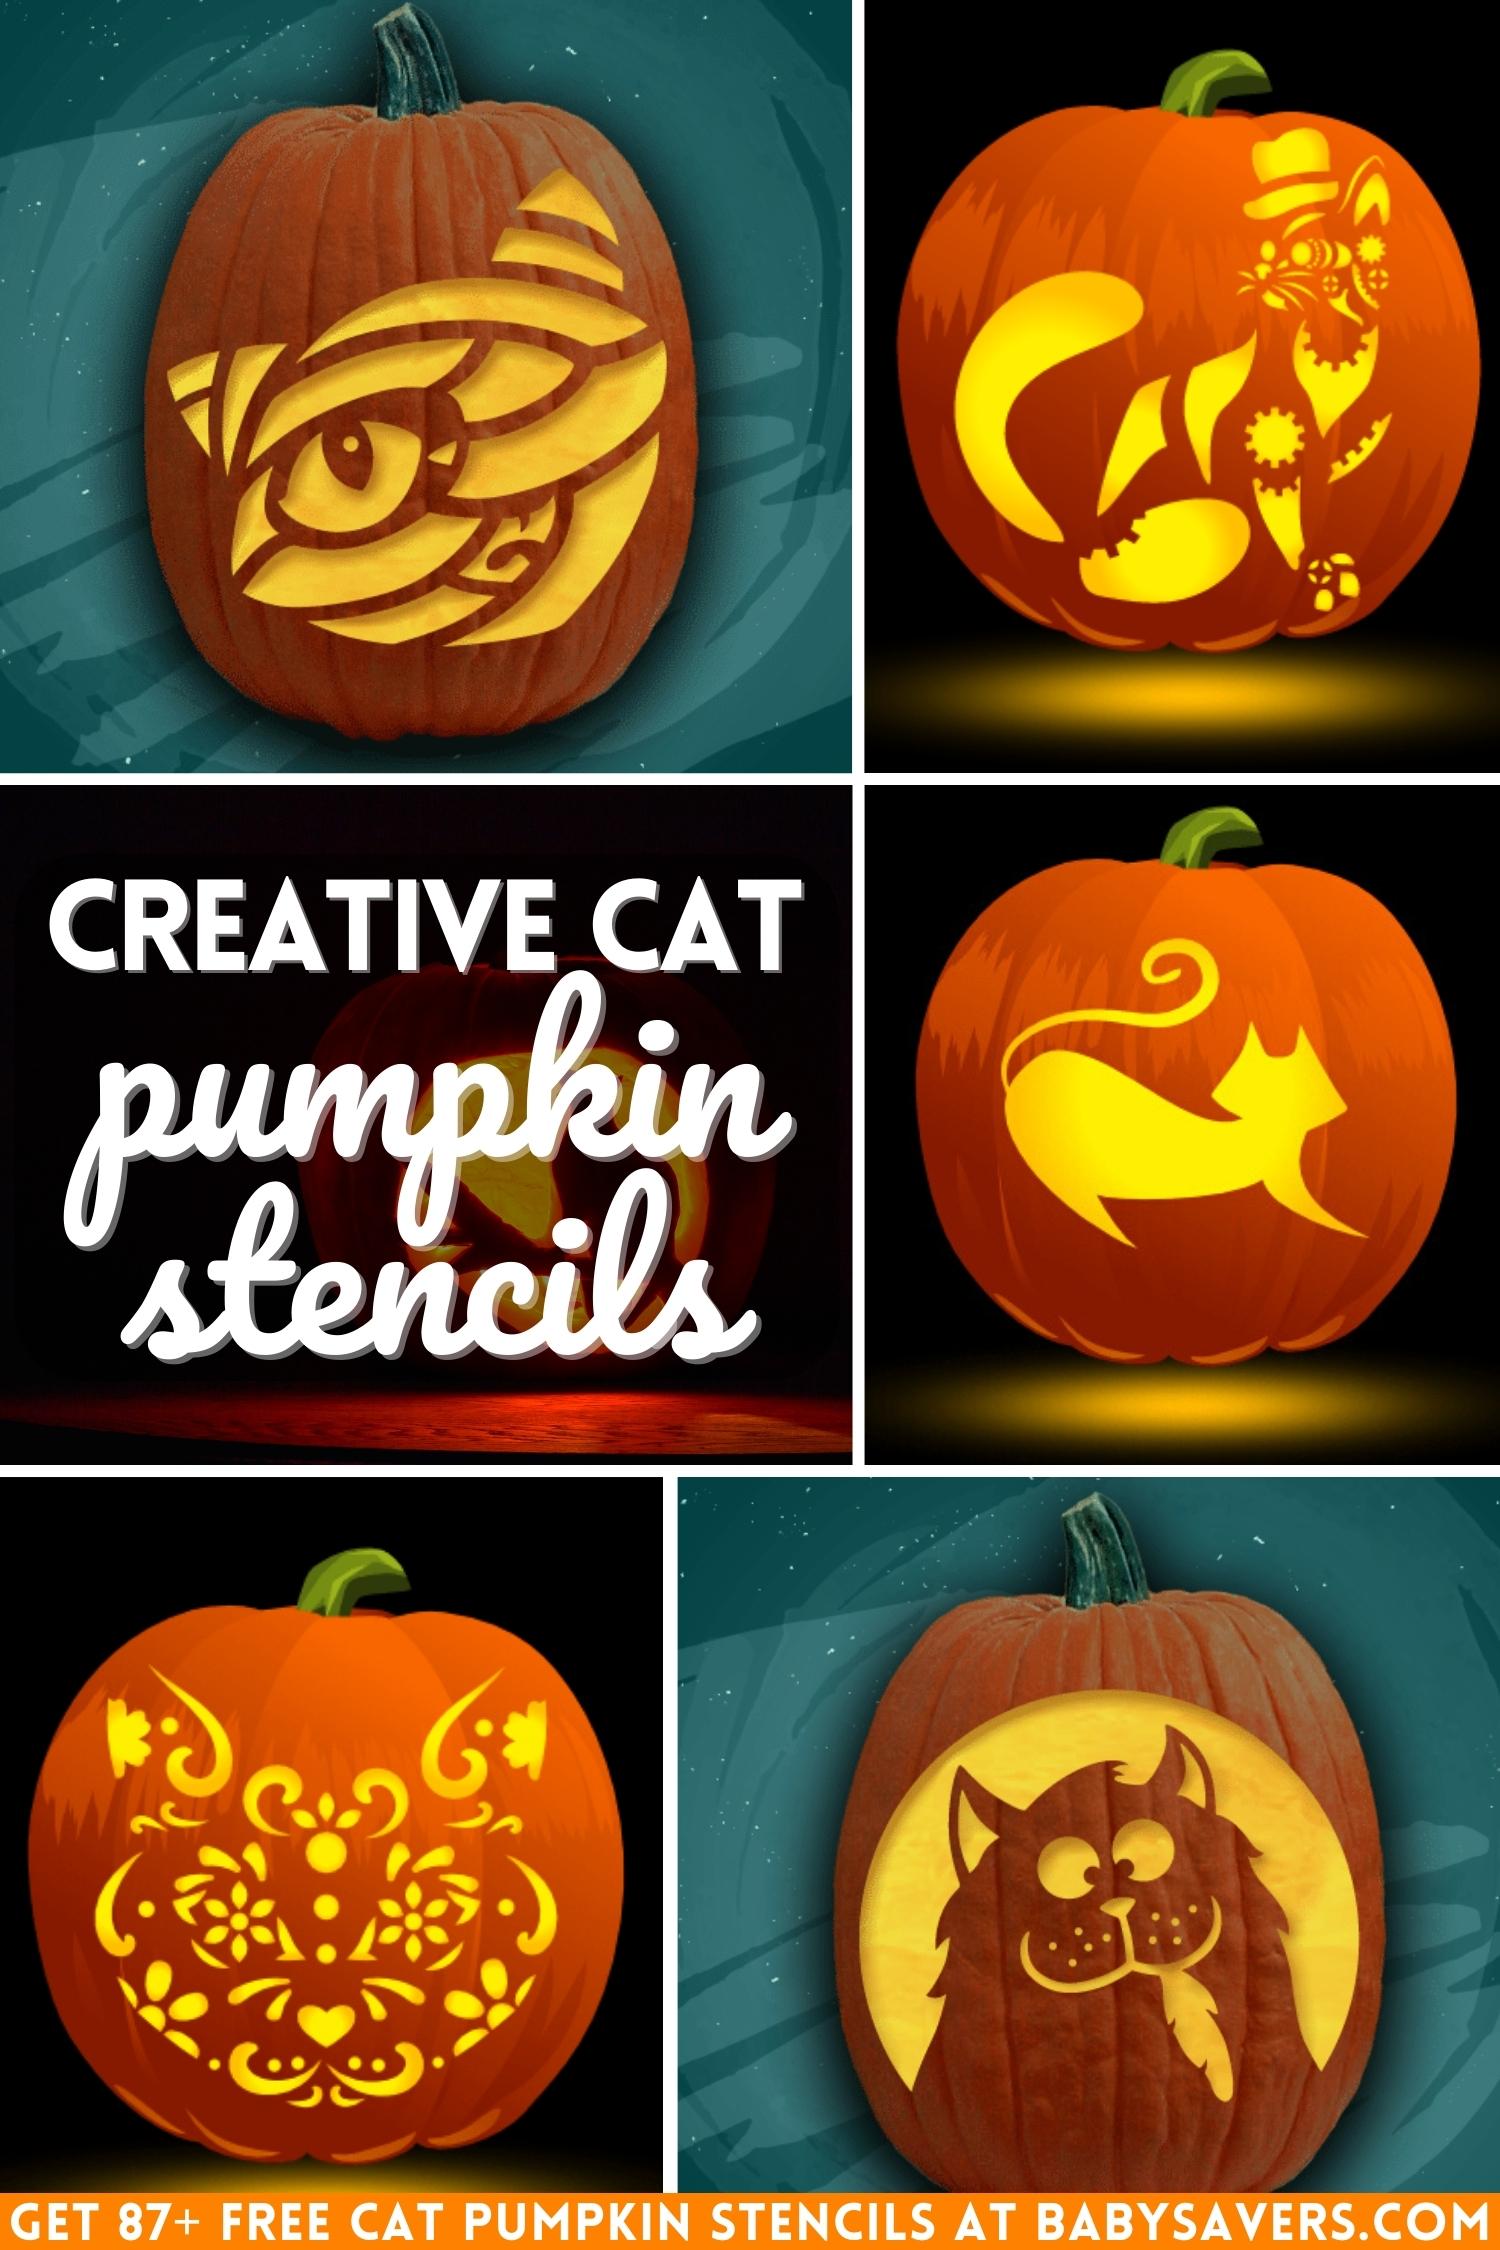 cat pumpkin carving stencils featuring creative designs